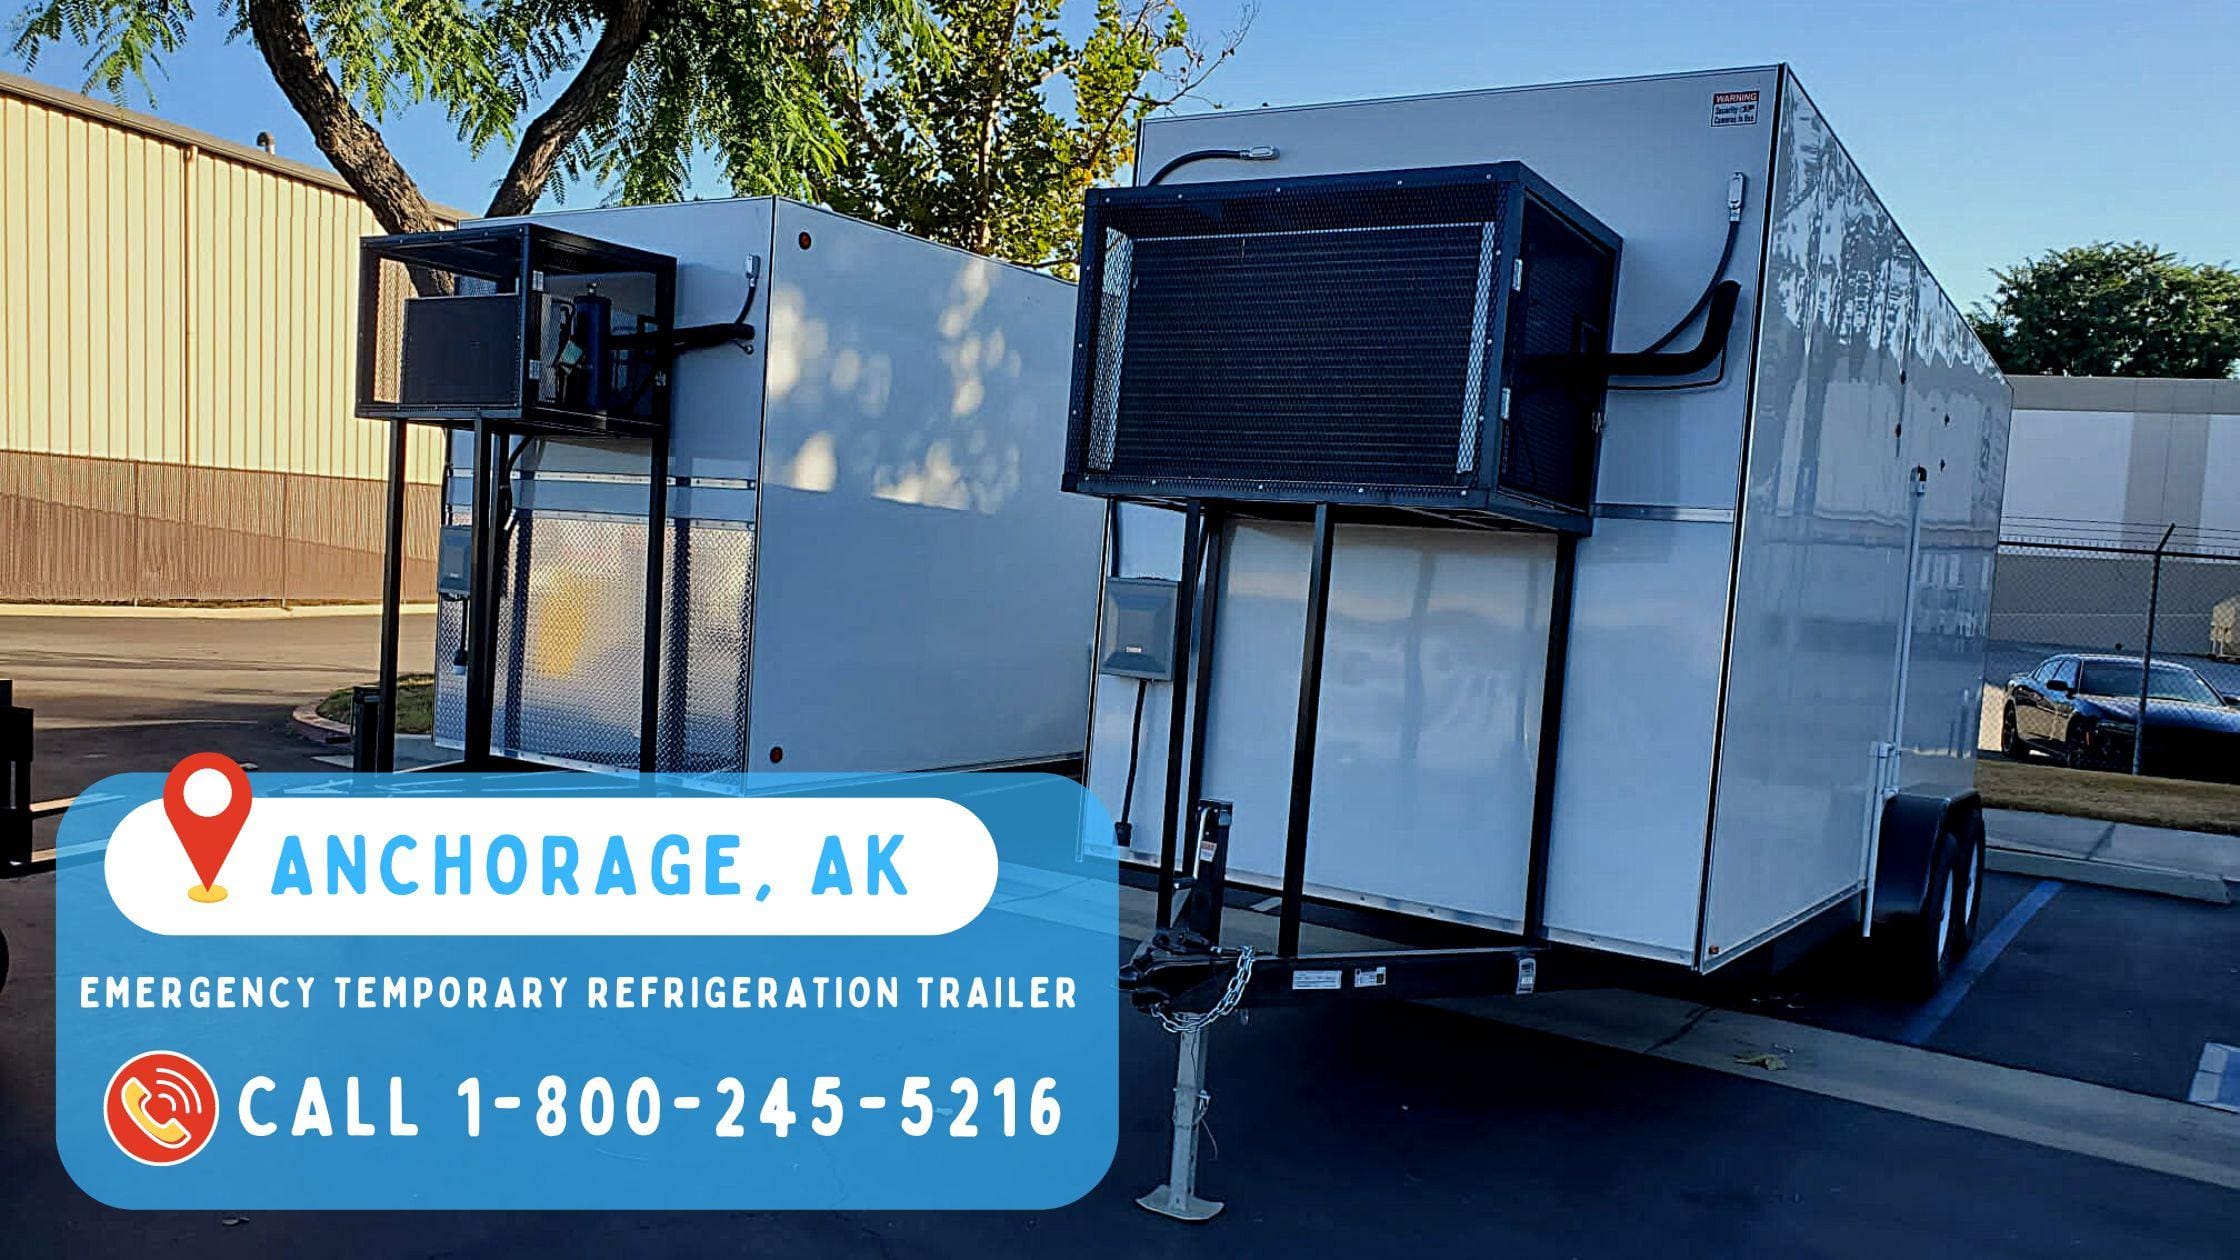 Emergency Temporary refrigeration trailer in Anchorage